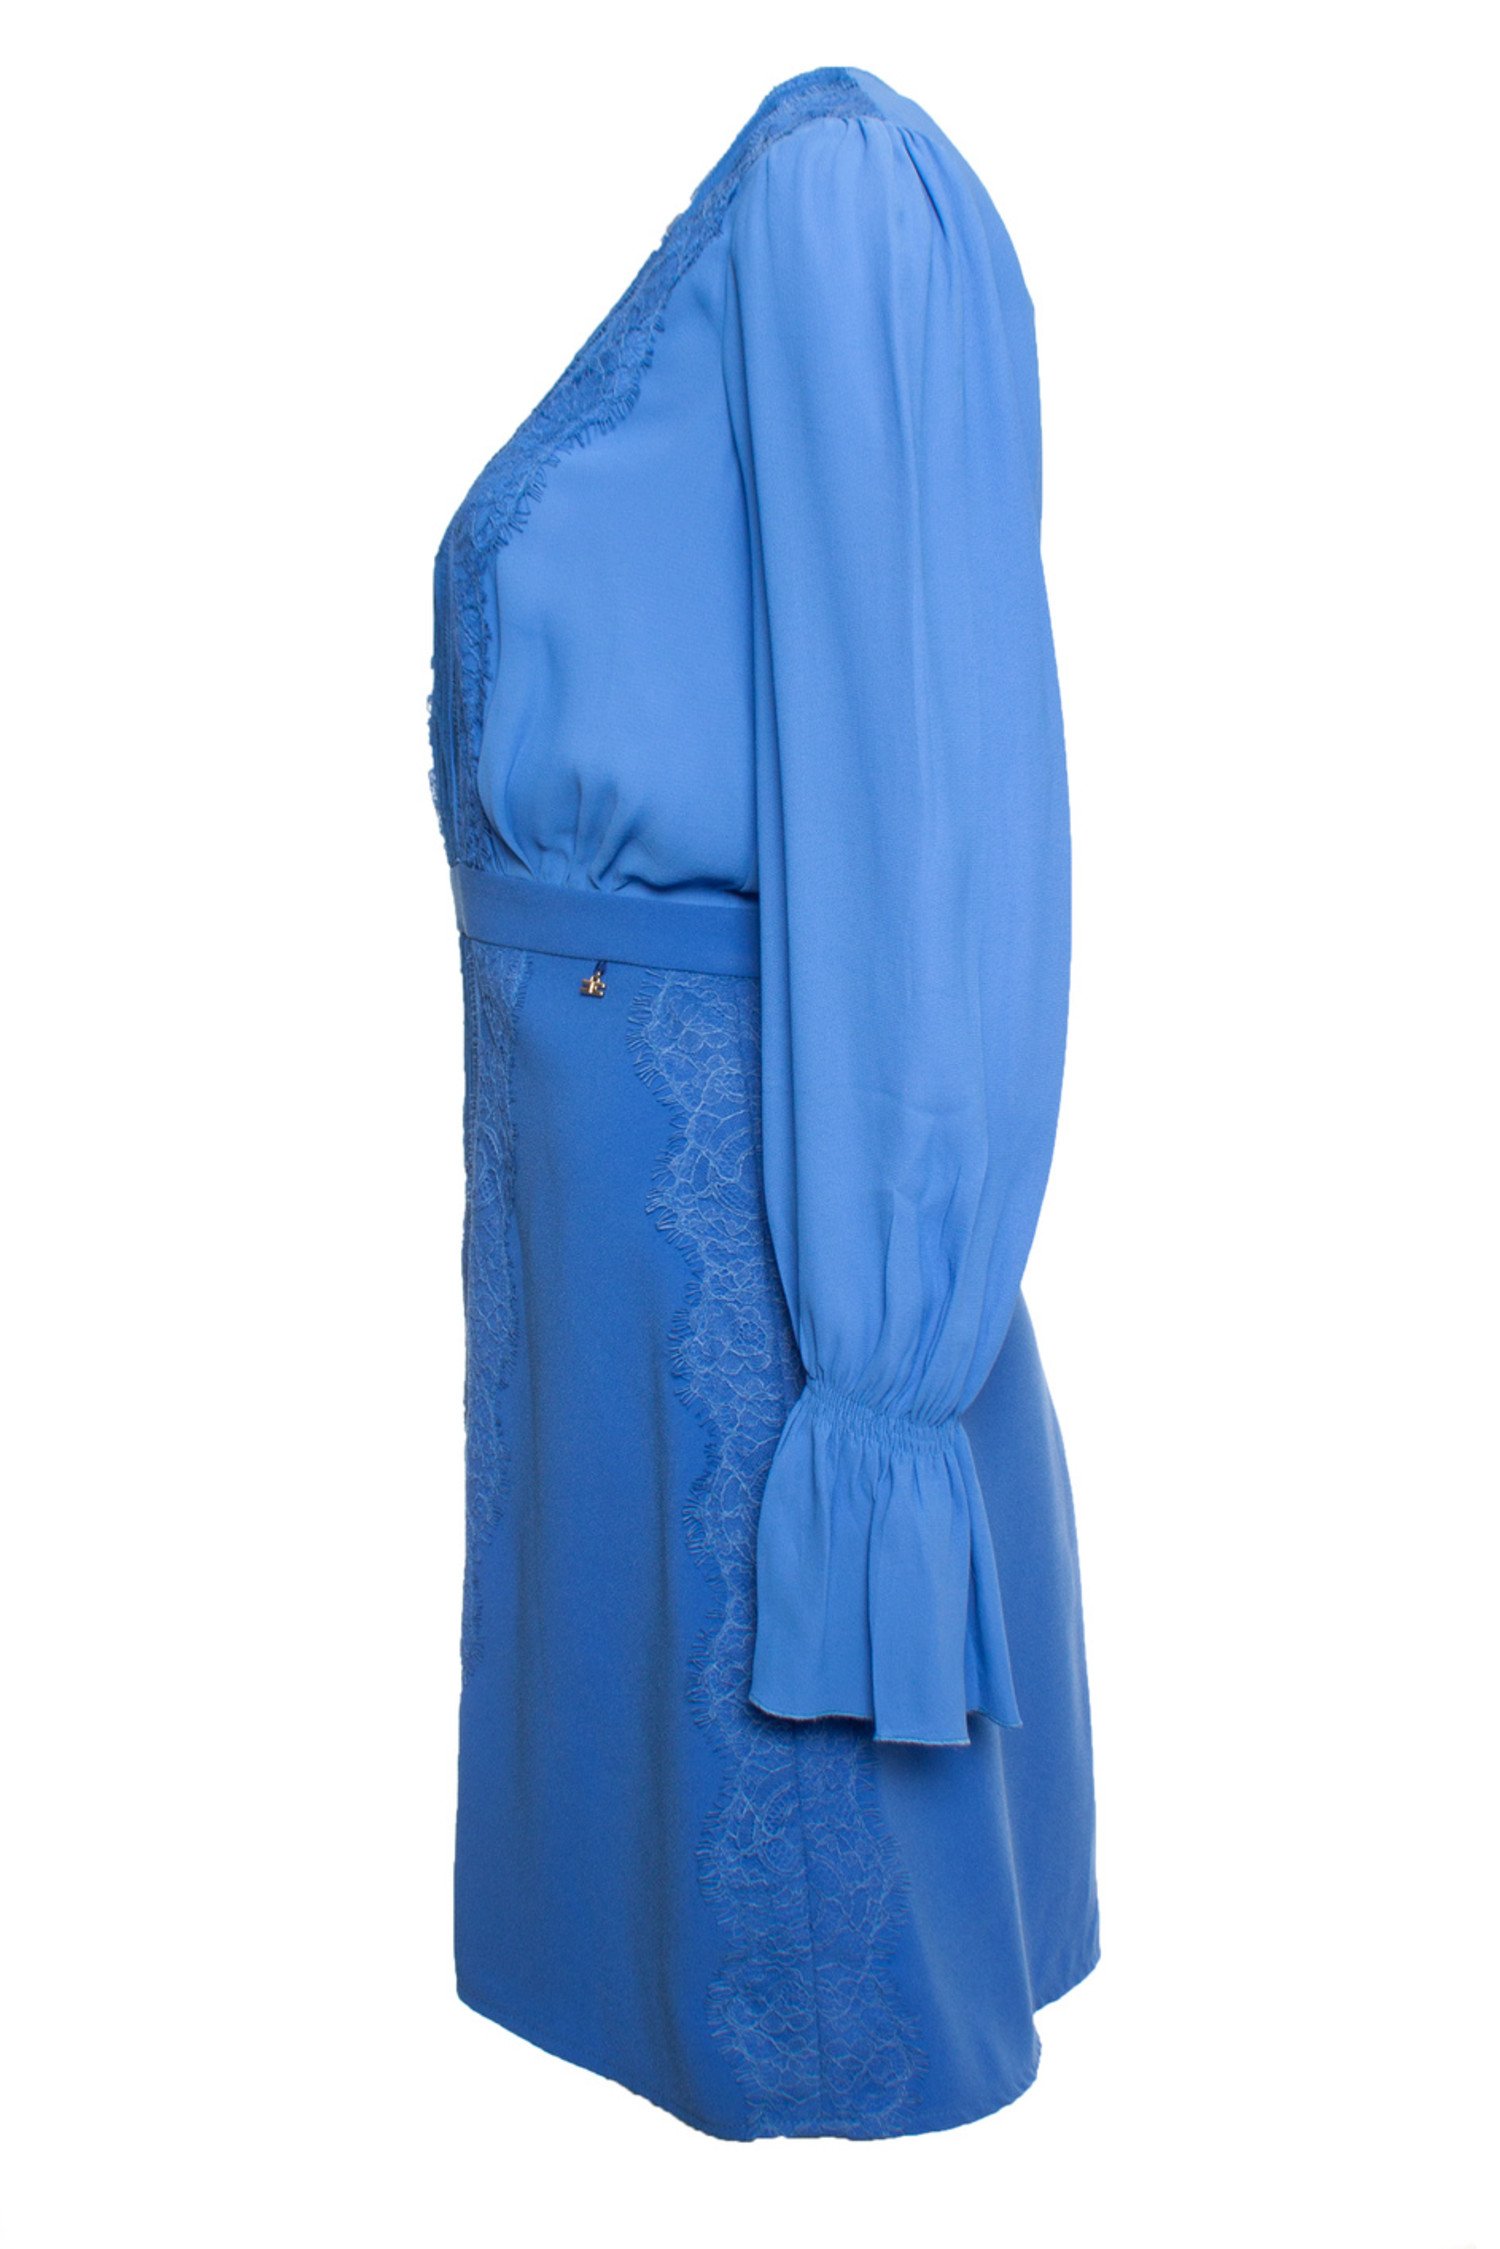 India Ten einde raad veel plezier Elisabetta Franchi, Blauwe jurk met kanten details - Unique Designer Pieces